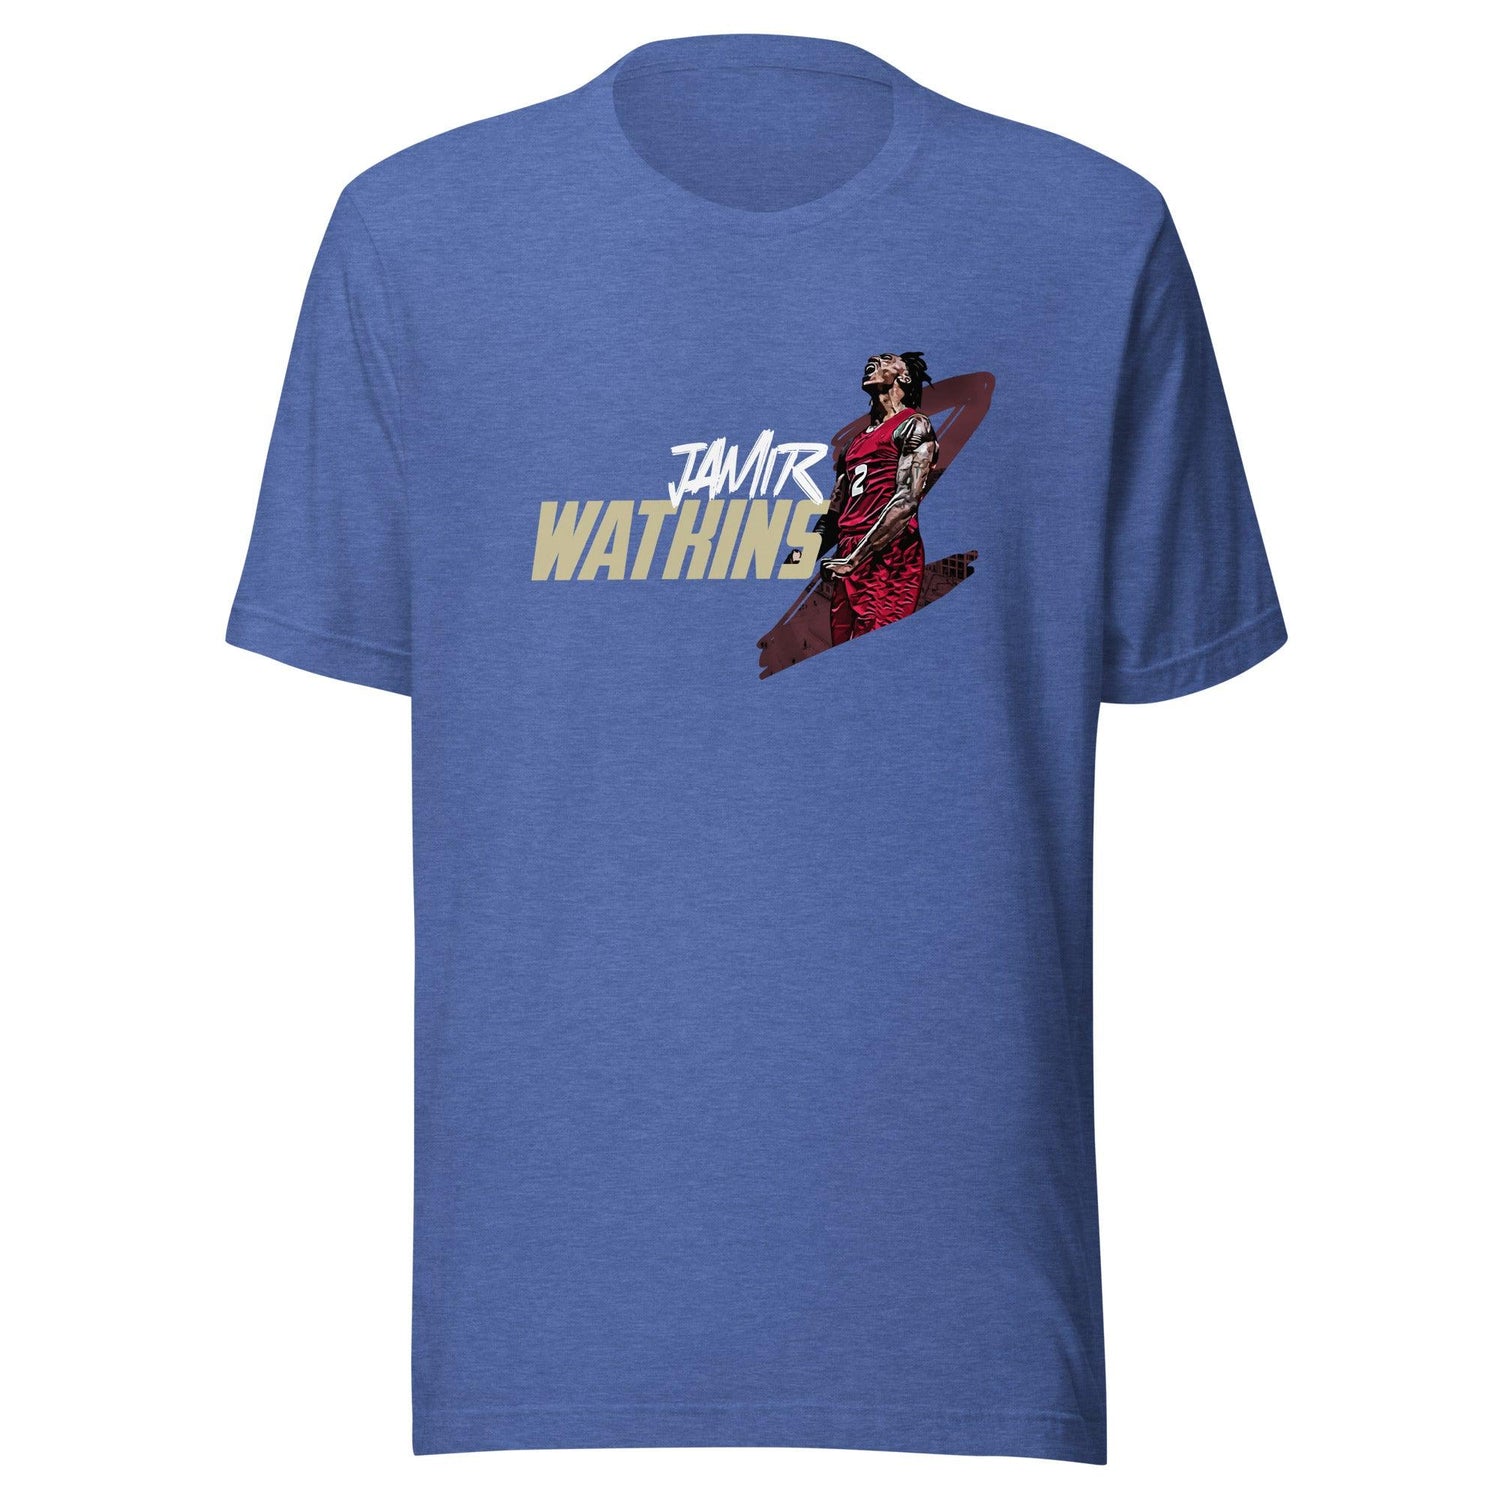 Jamir Watkins "Signature" t-shirt - Fan Arch